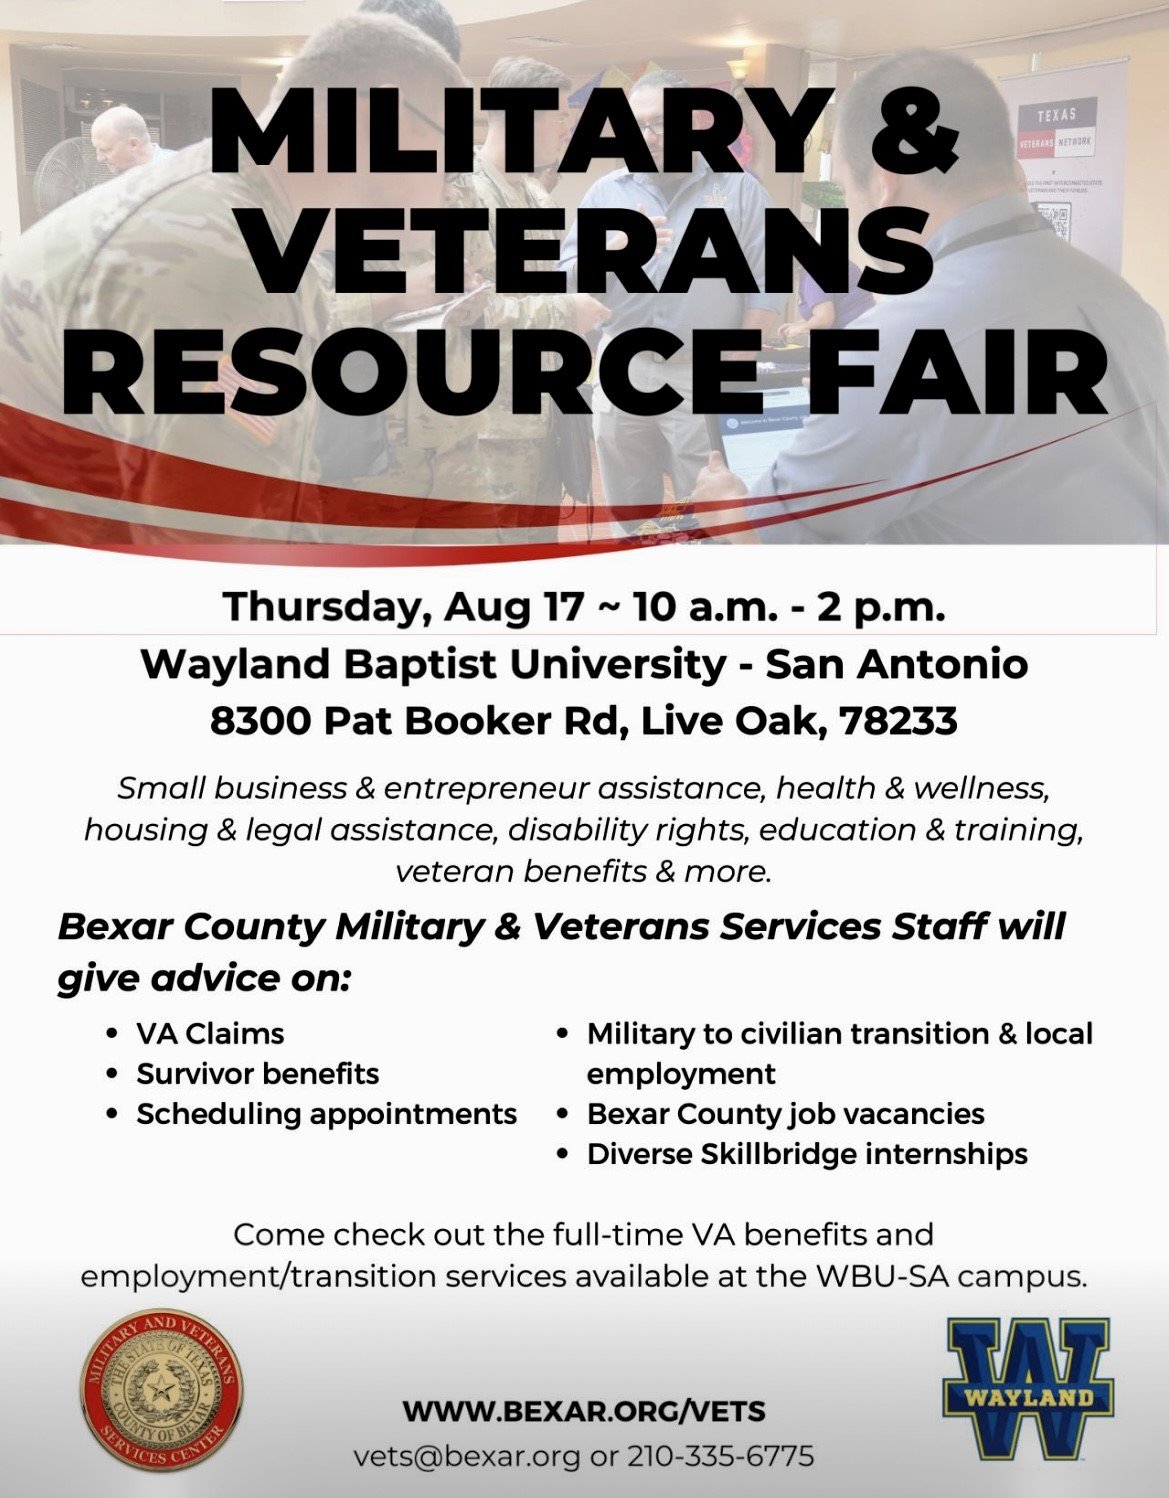 Military & Veterans Resource Fair August 17